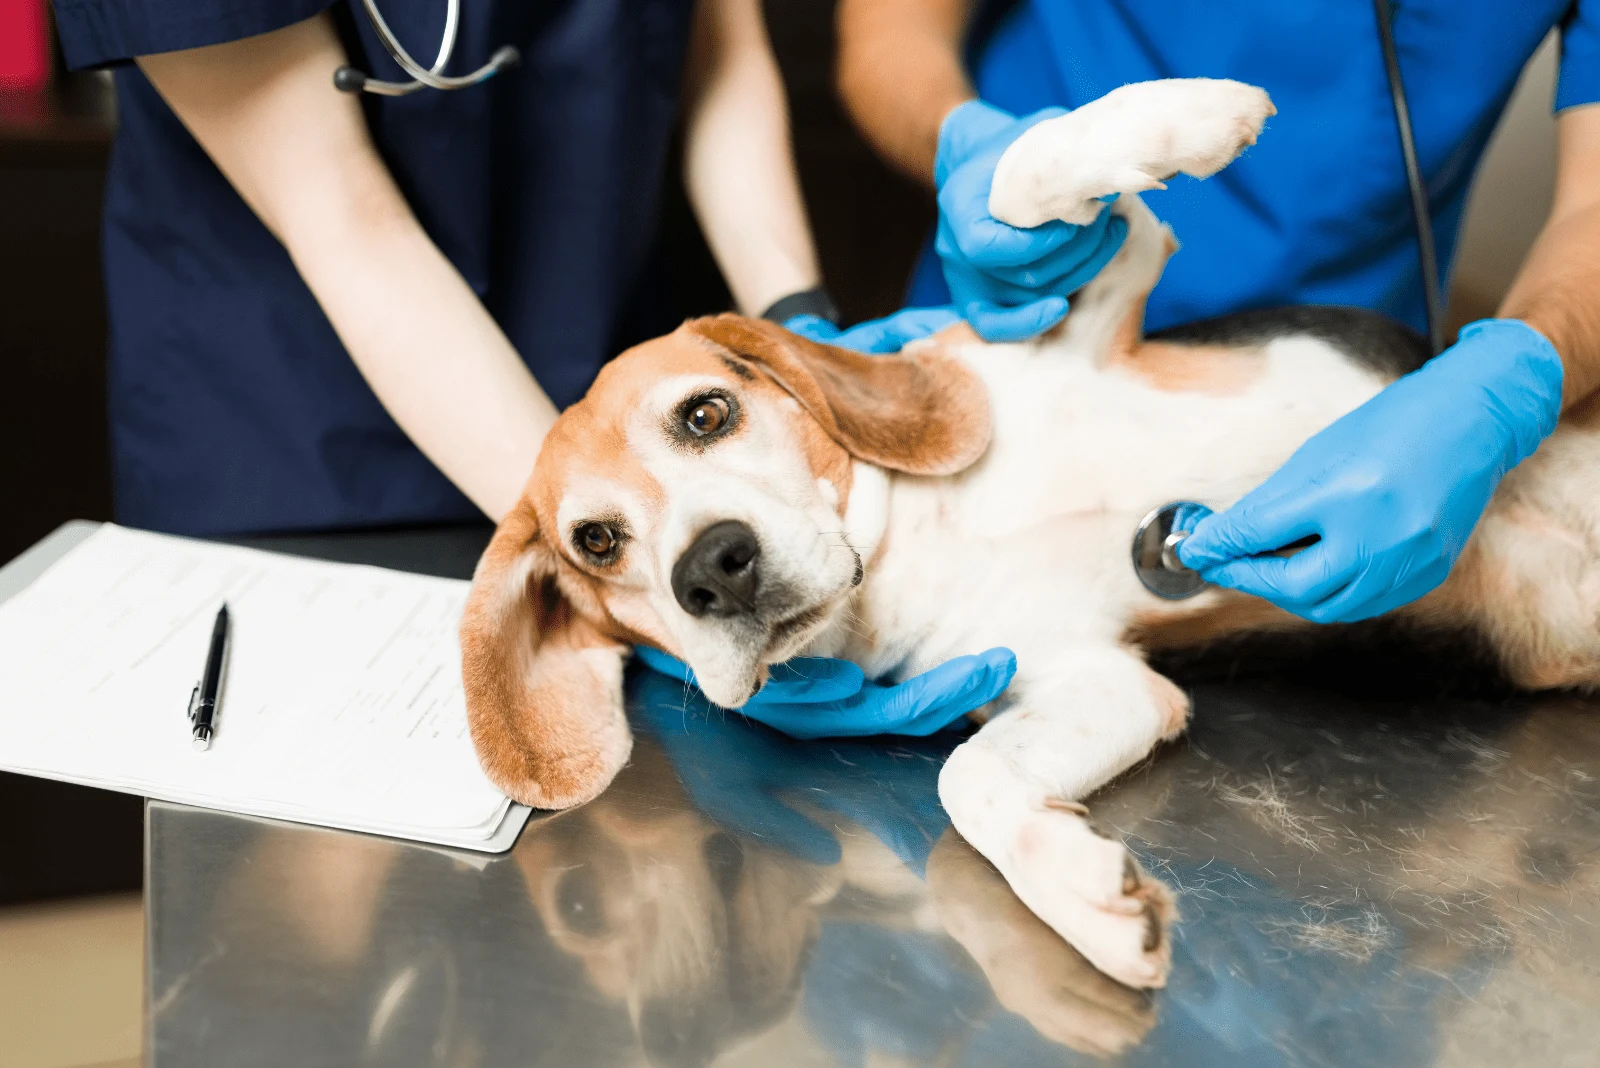 veterinarians examine the dog